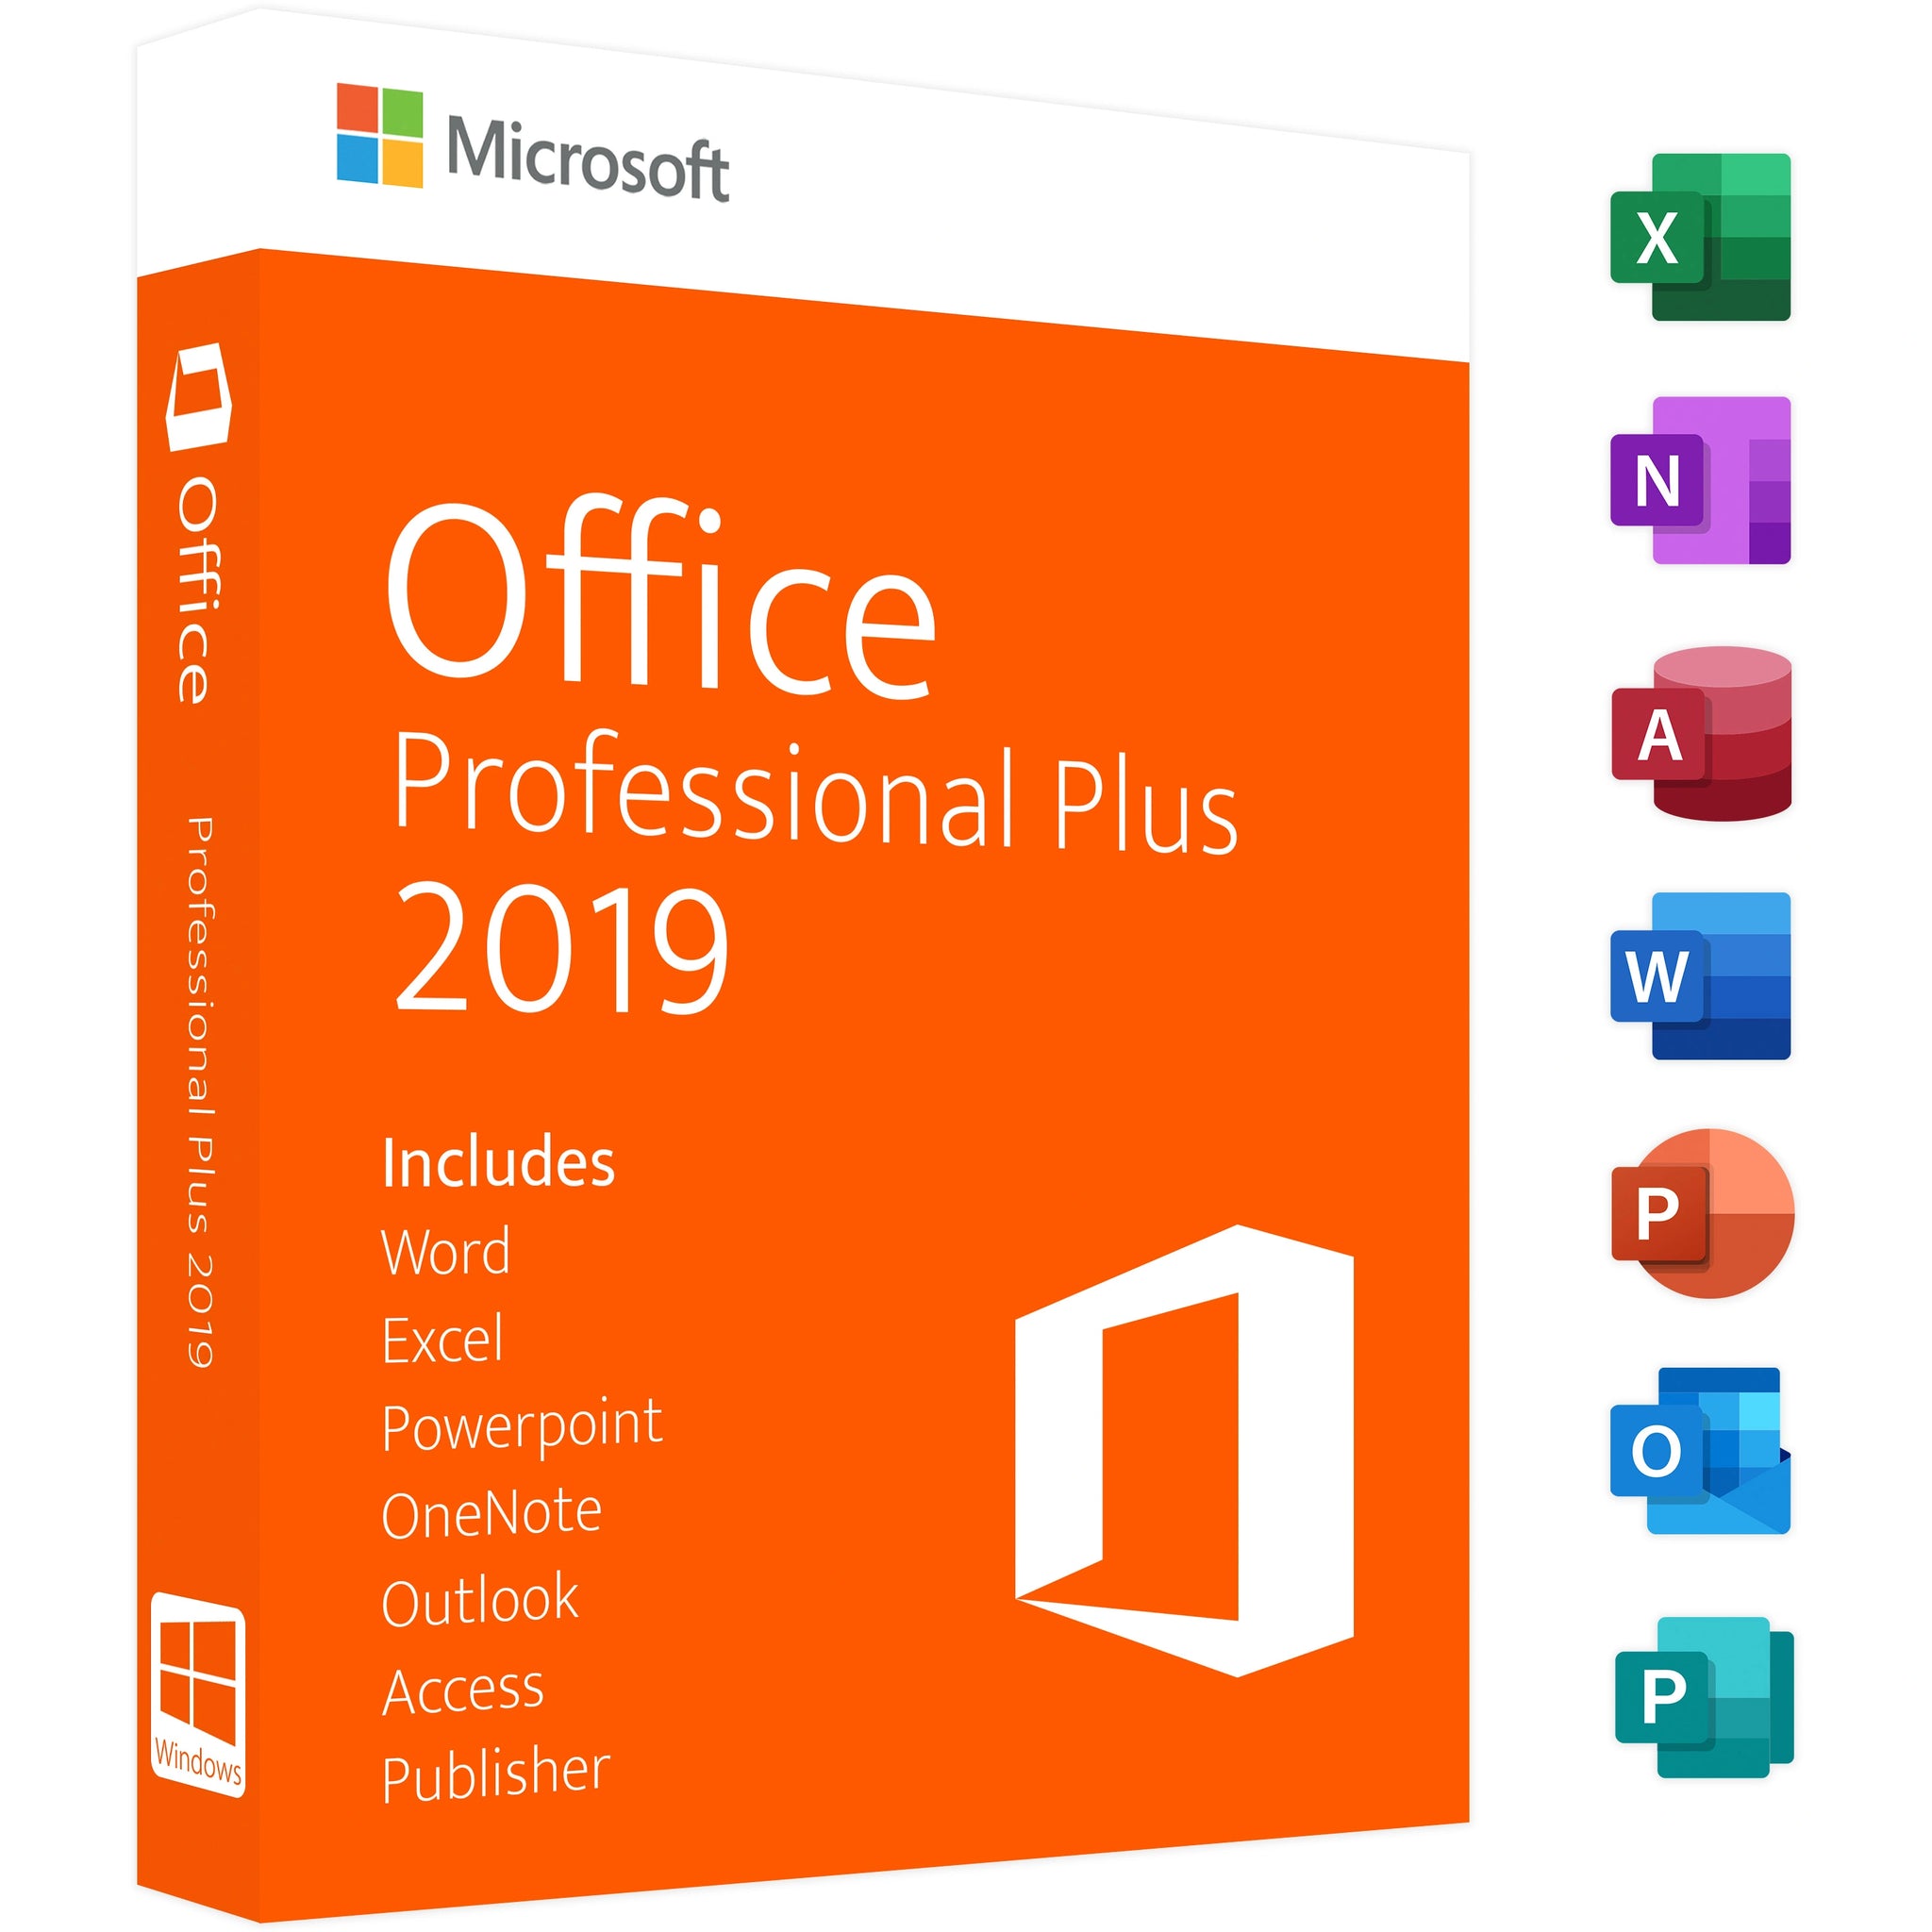 Microsoft Office 2019 Professional Plus- Lifetime License Key for 1 PC